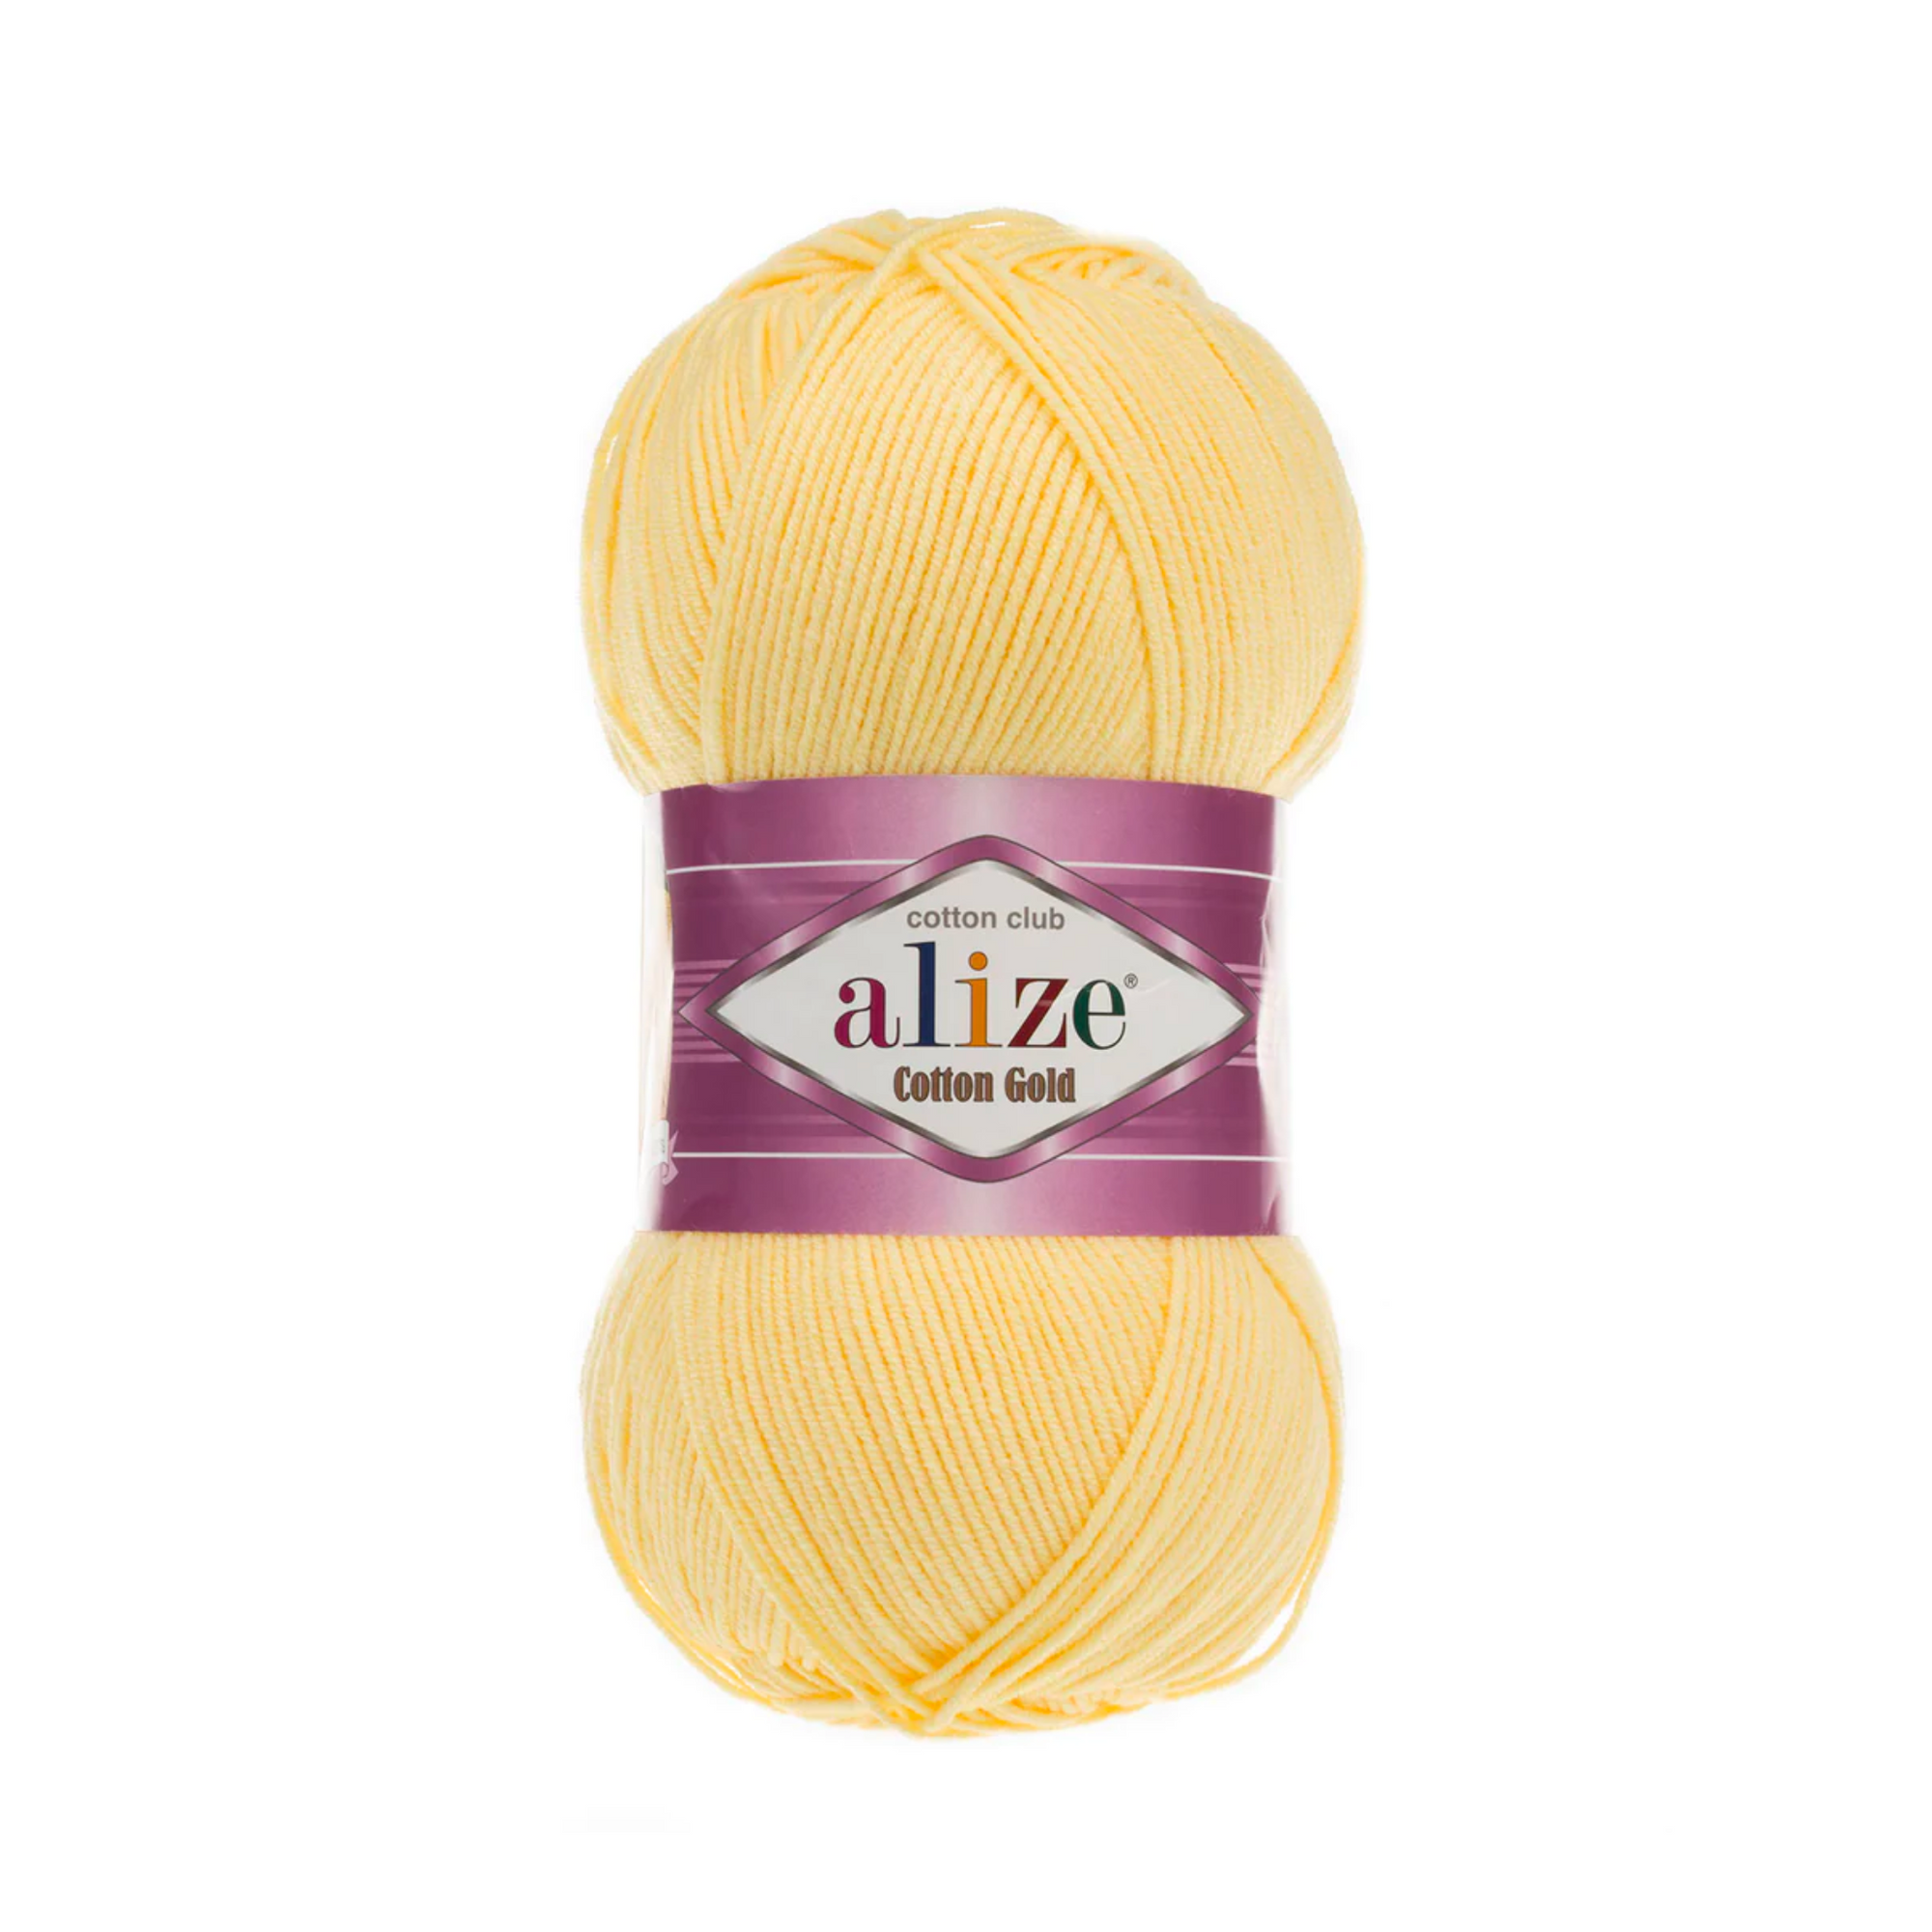 Alize Cotton Gold Knitting Yarn, Cream - 01